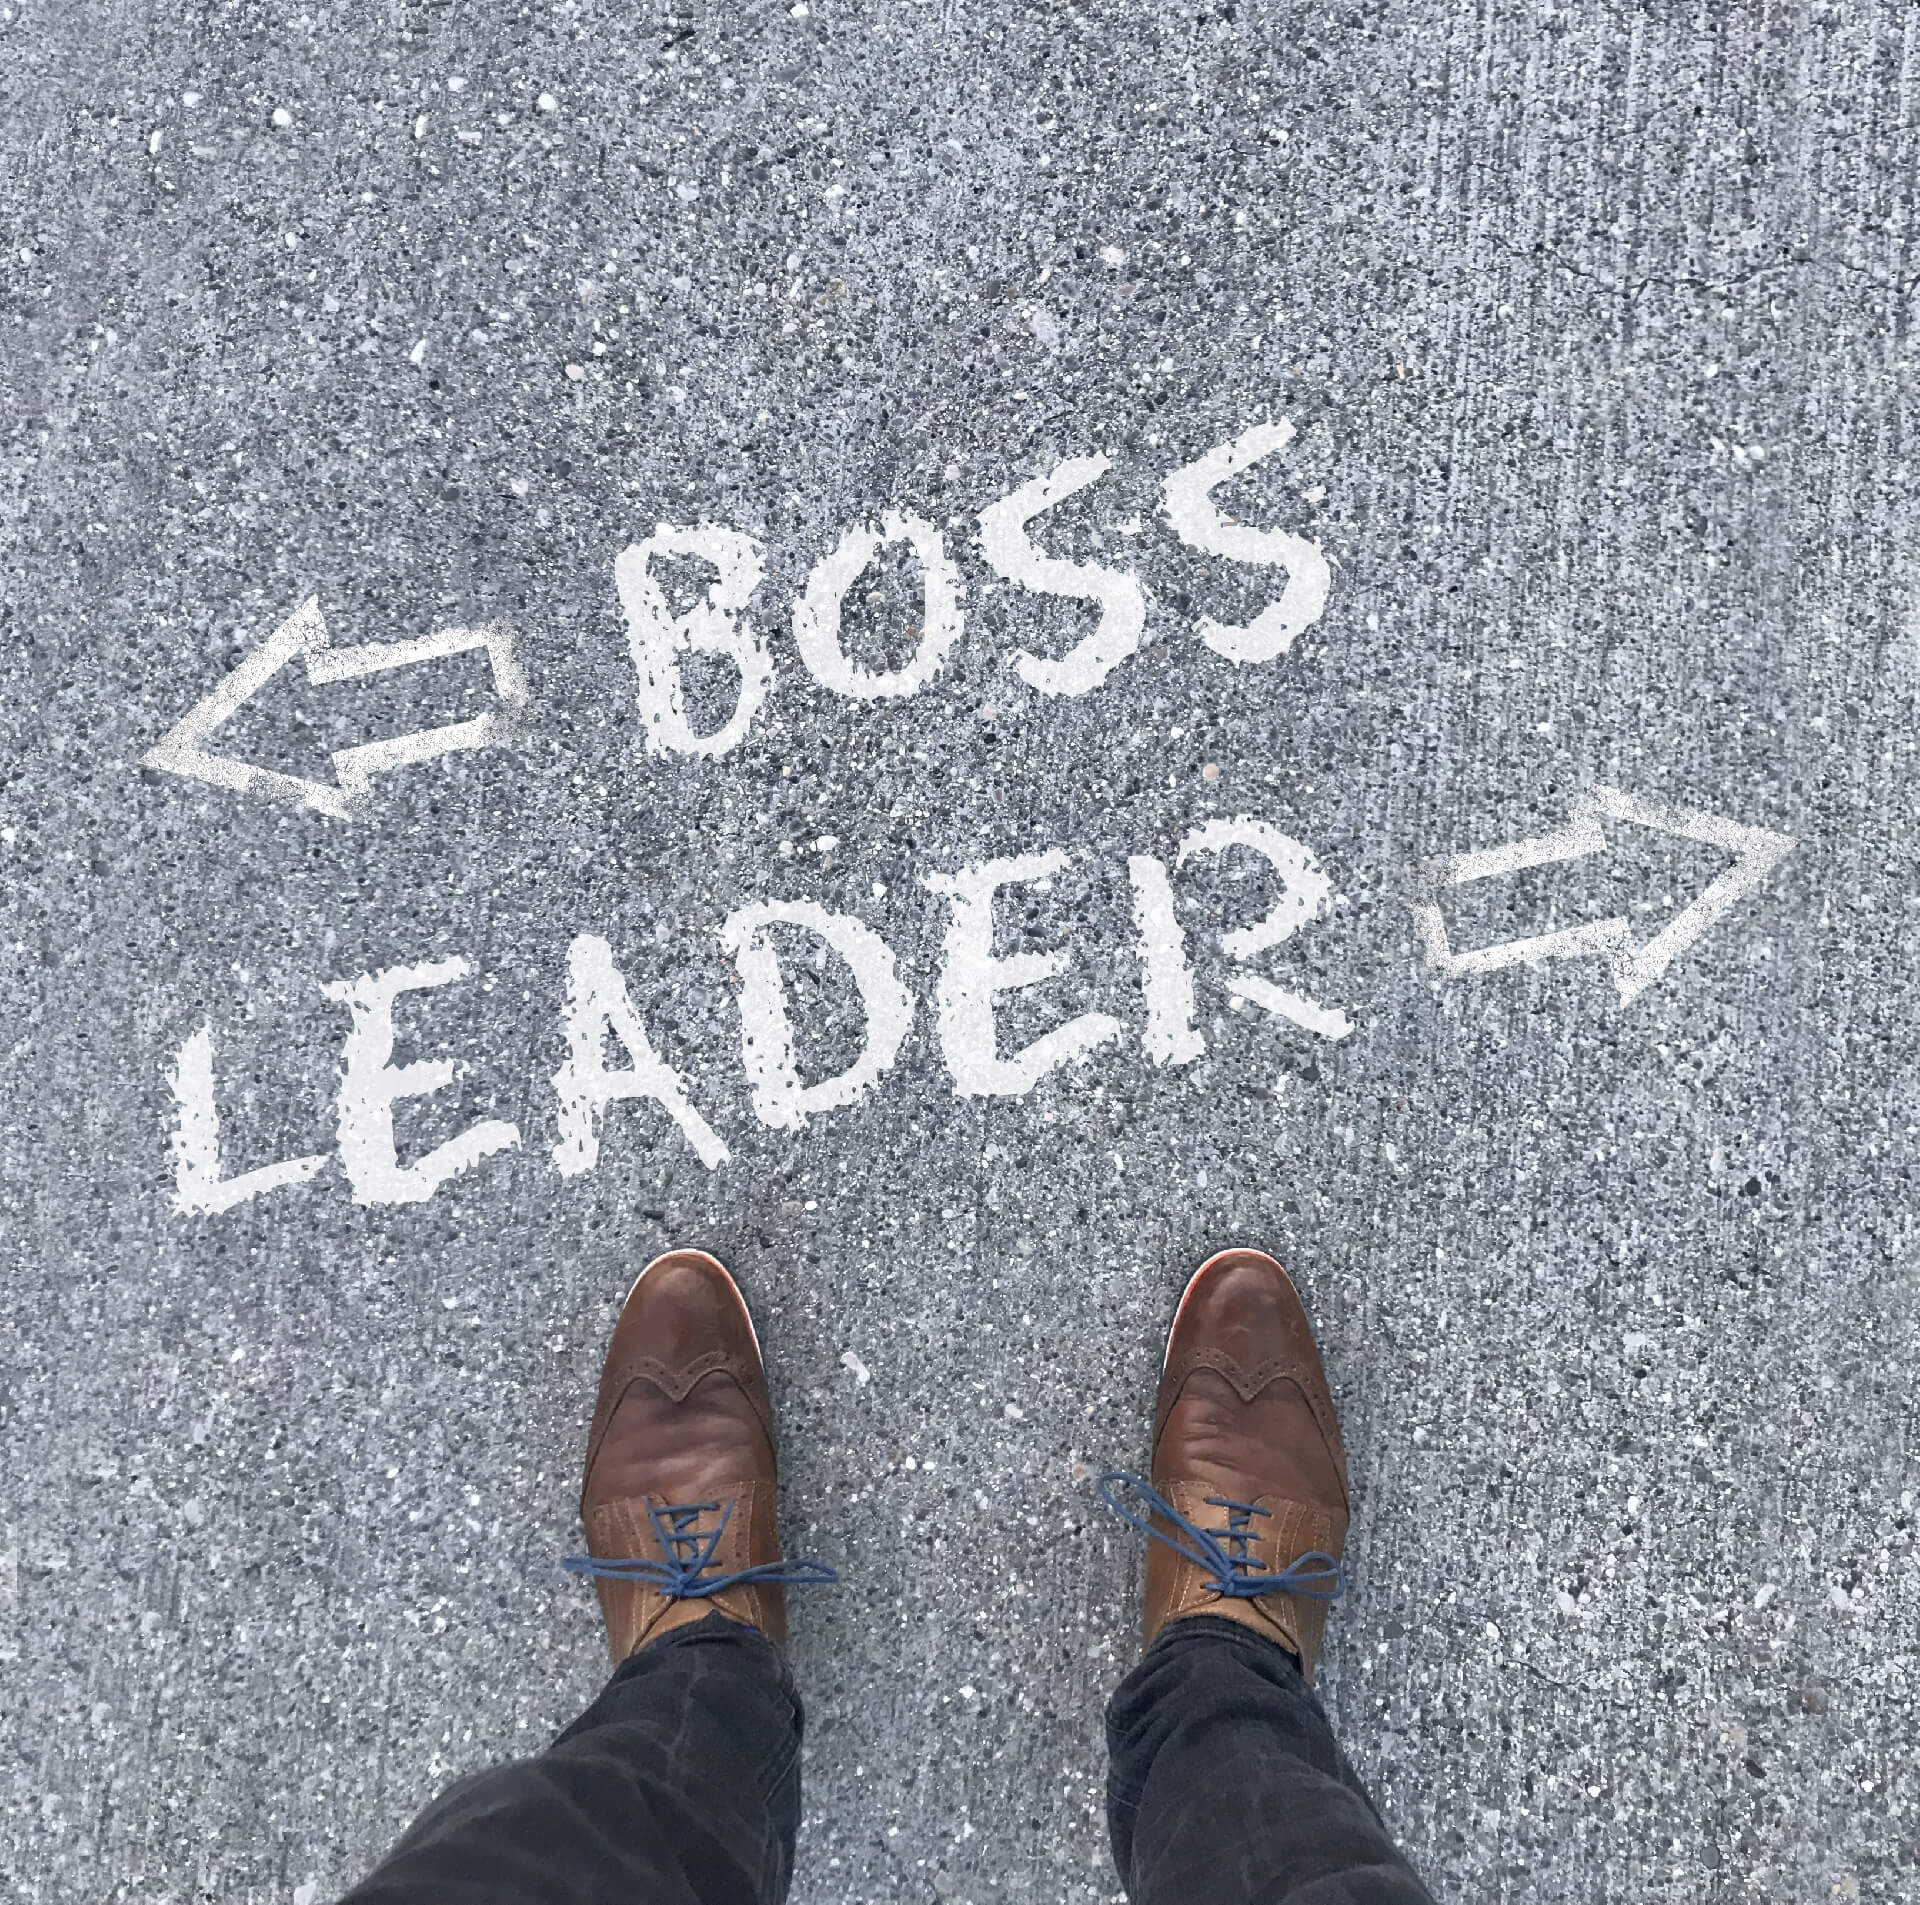 leadership skills do not develop spontaneously